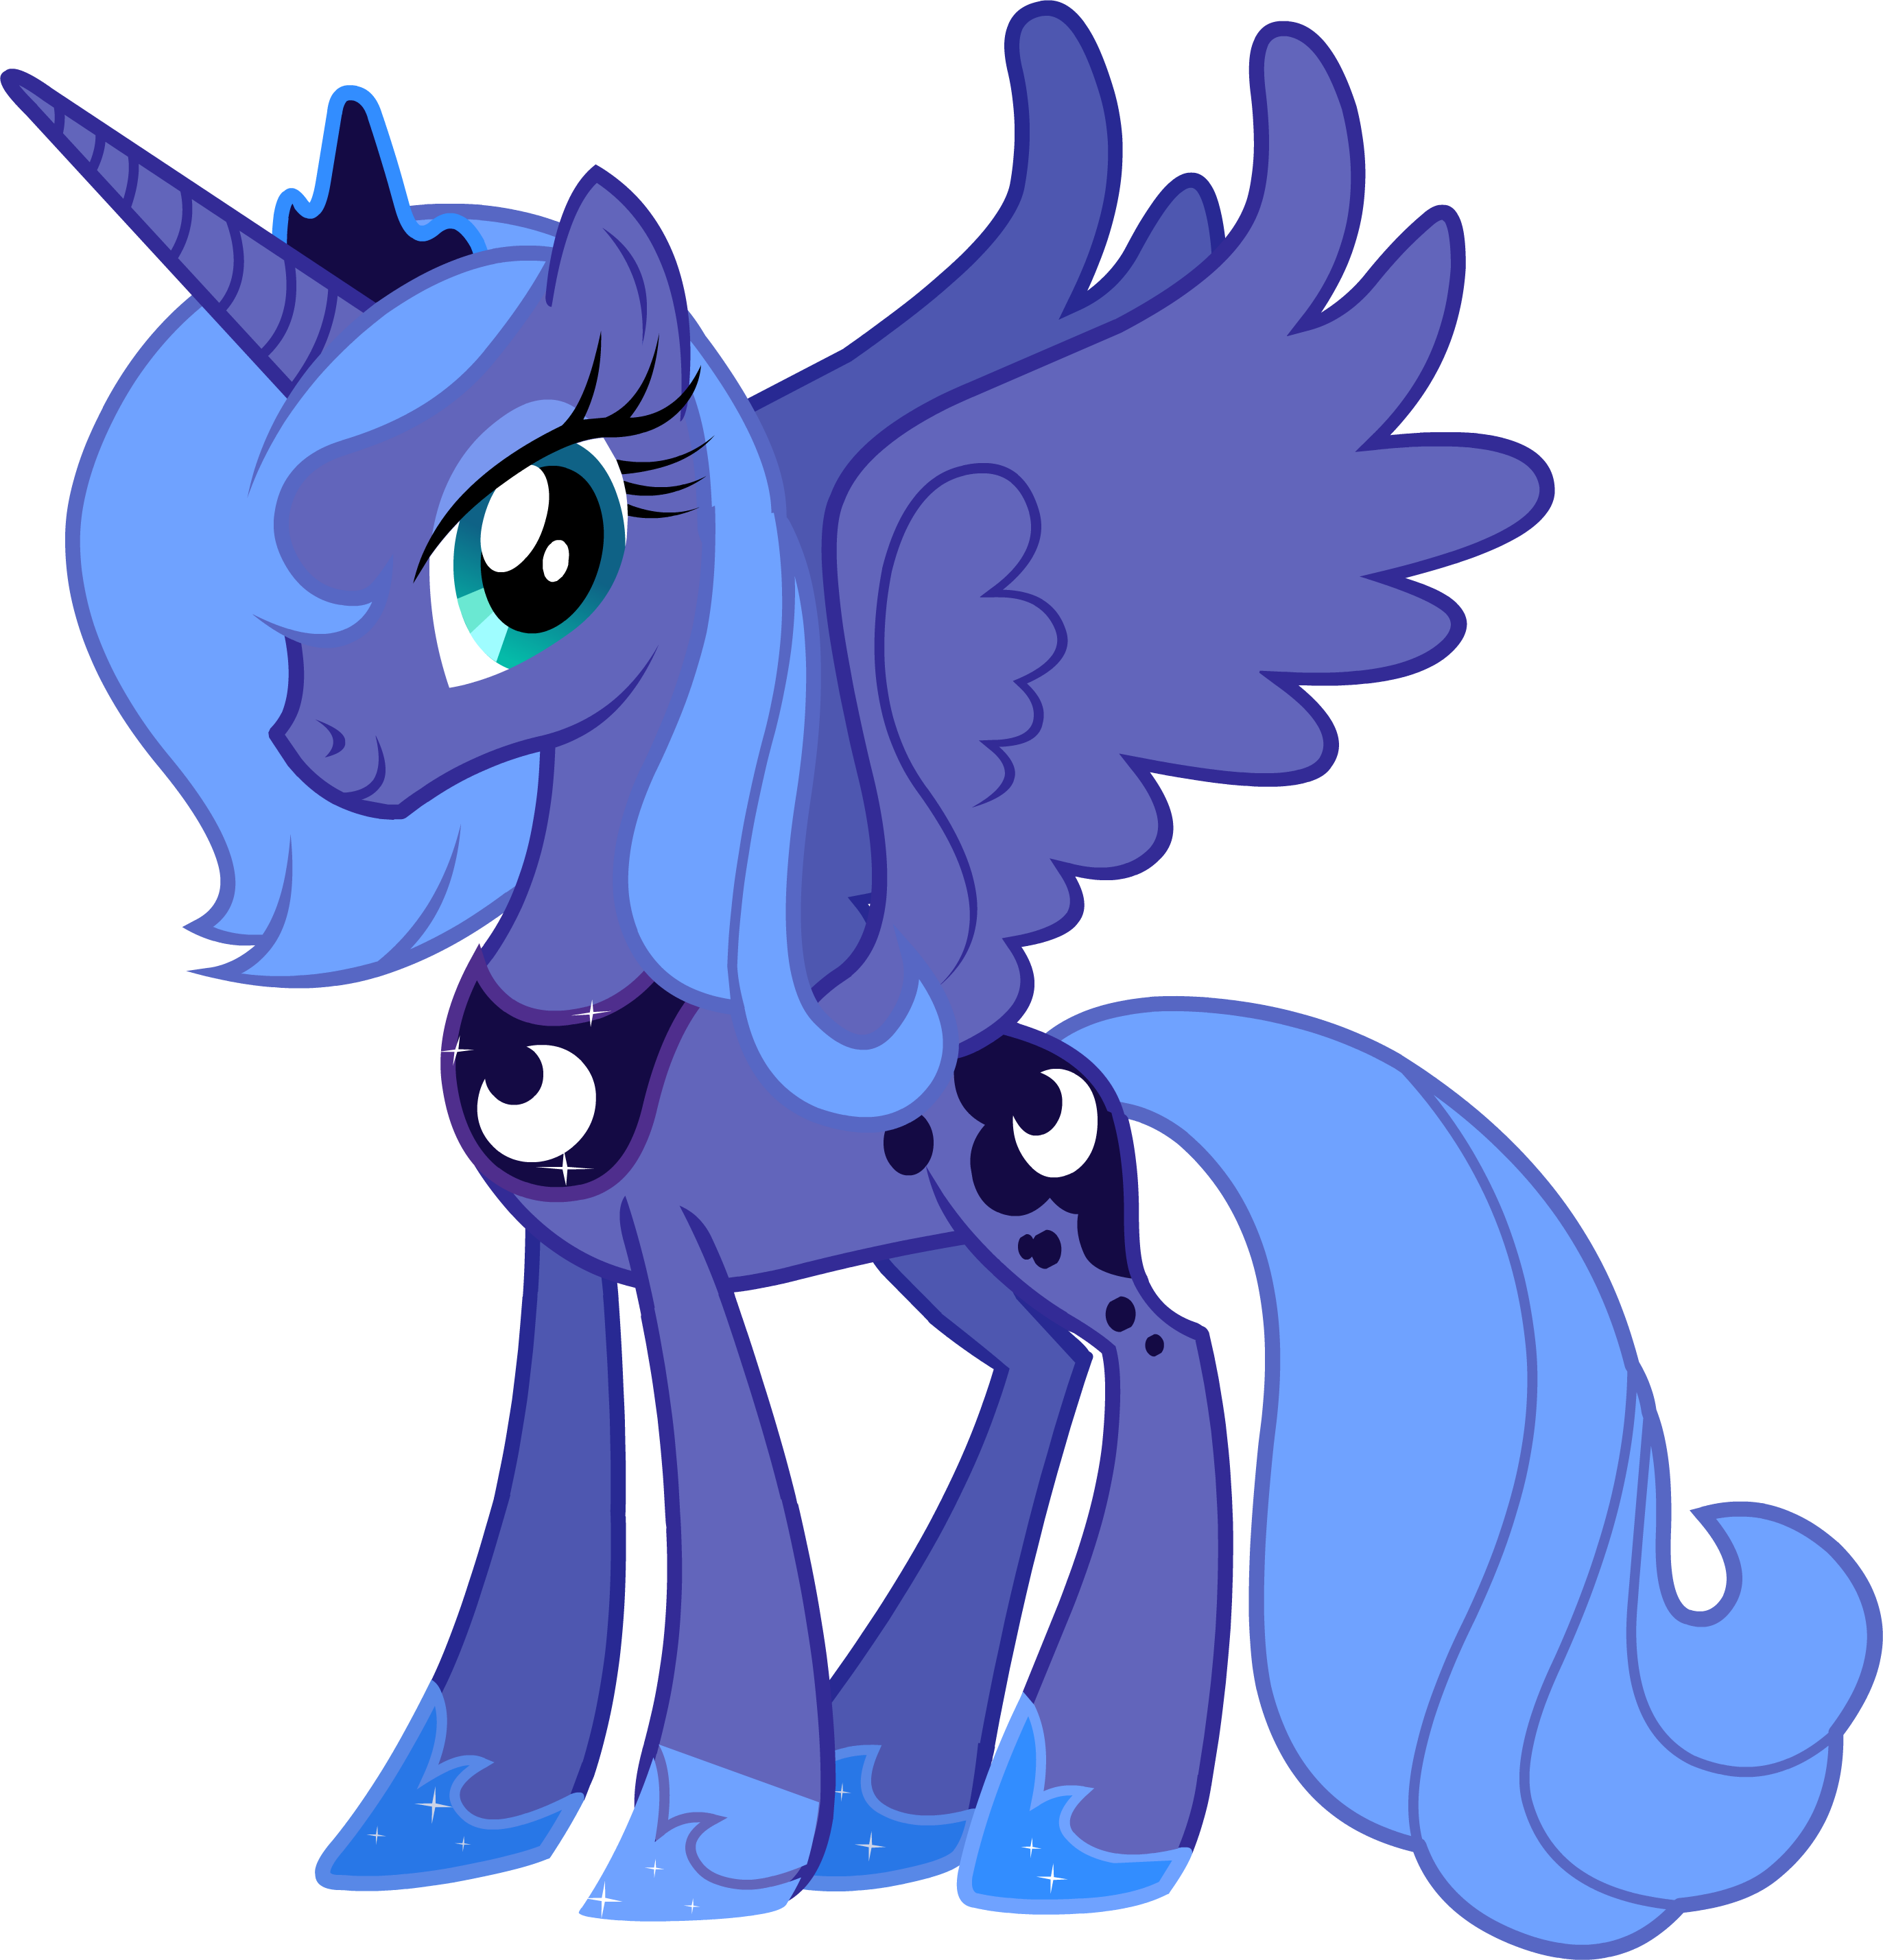 Pony луна. Мой маленький пони принцесса Луна. Аликорн Луна. My little Pony Luna. My little Pony Princess Luna.